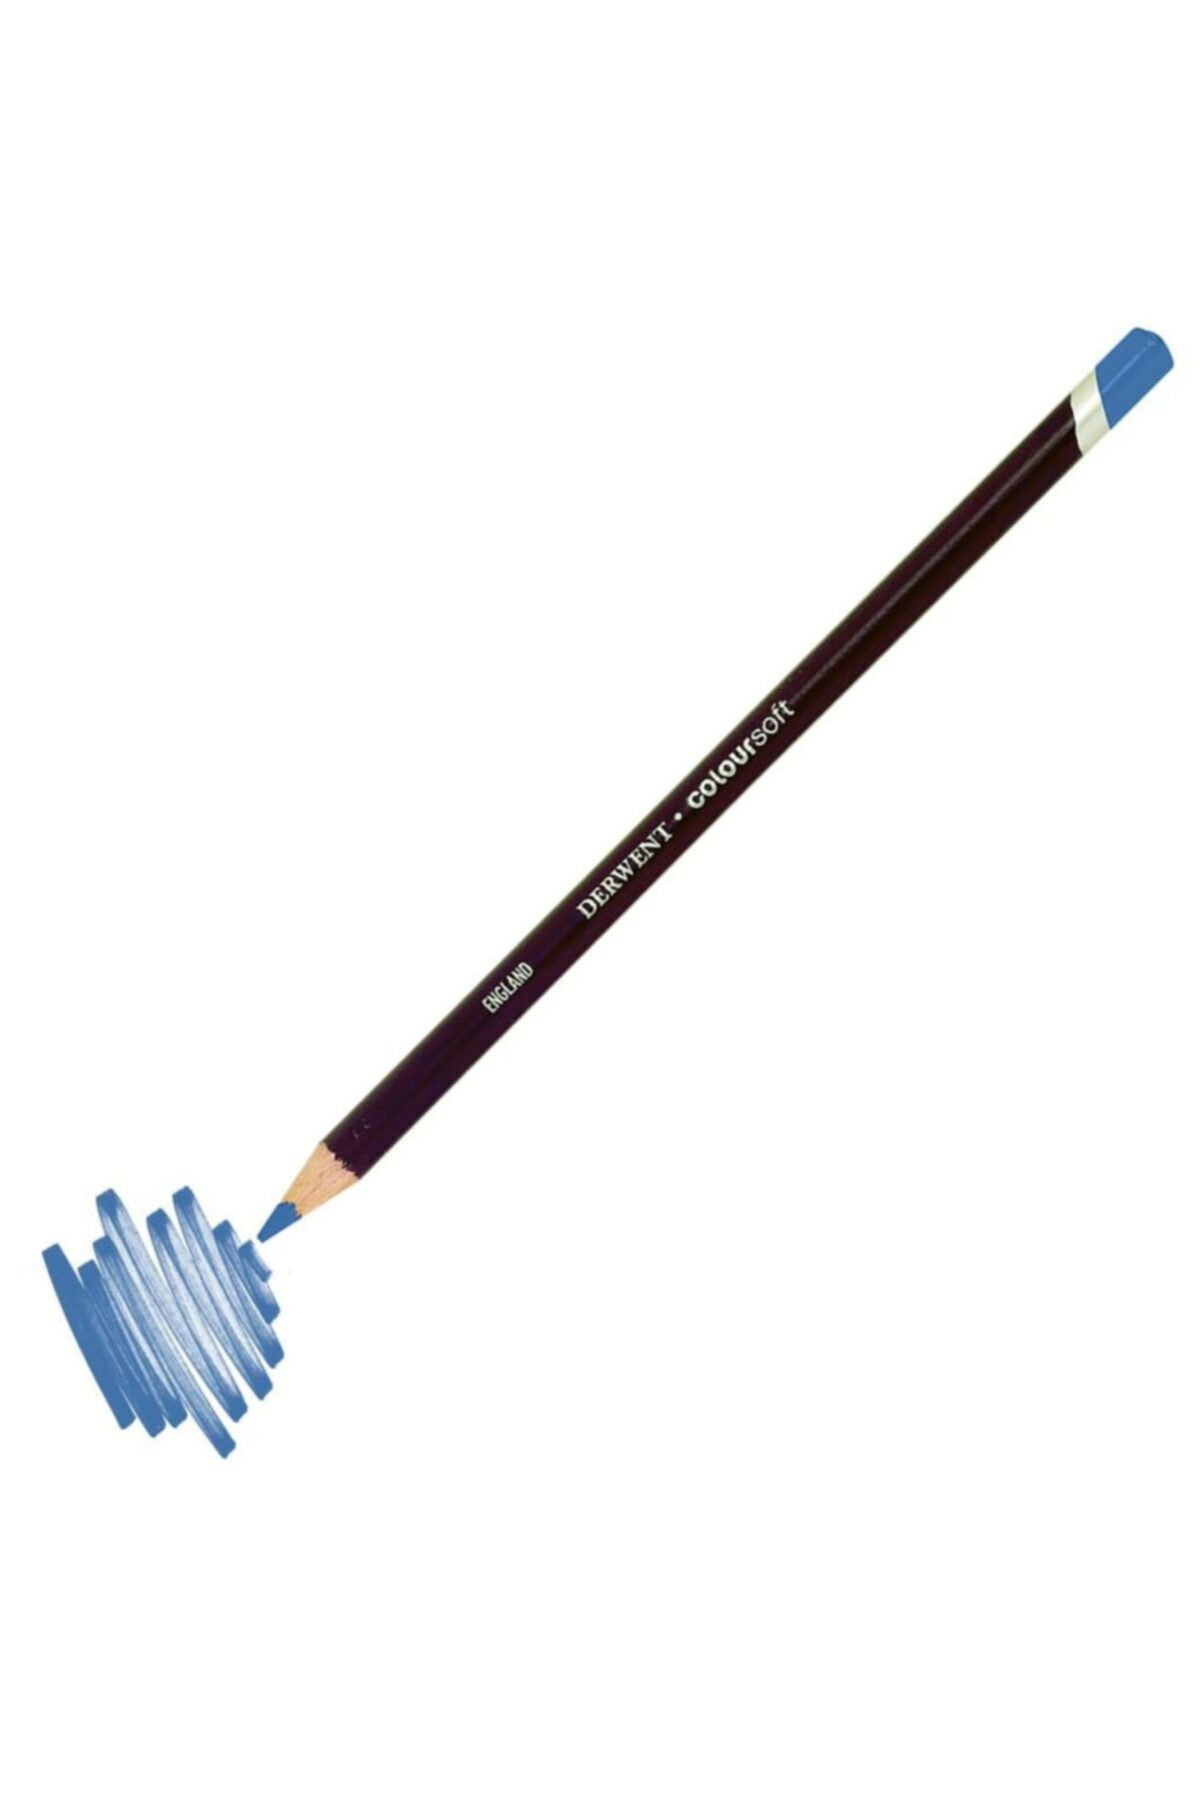 Derwent Coloursoft Pencil Yumuşak Kuru Boya Kalemi C370 Pale Blue